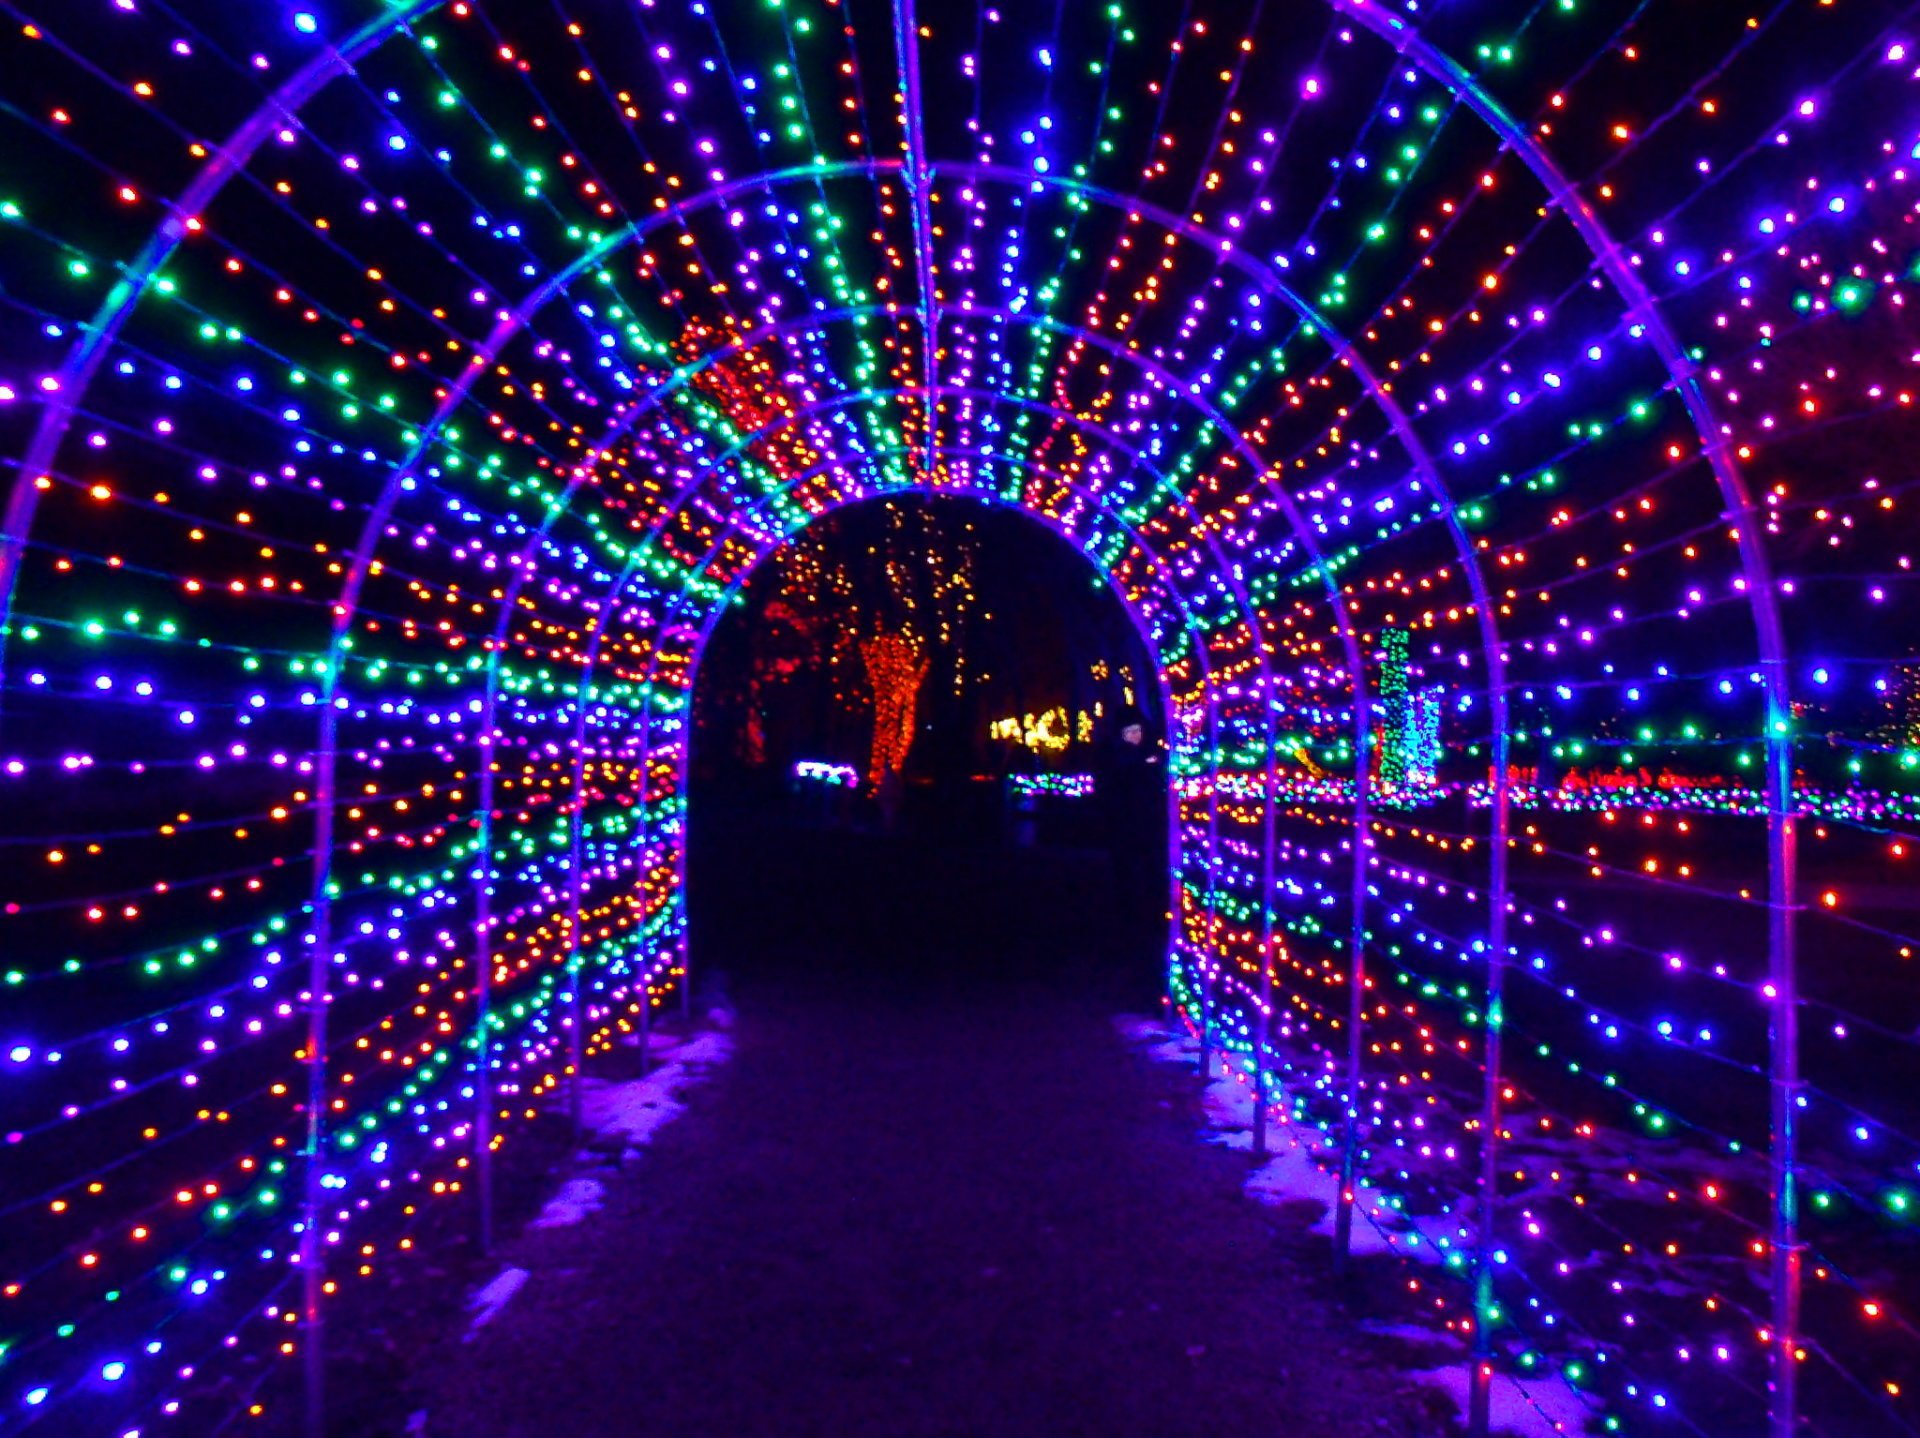 Colorado Christmas Lights